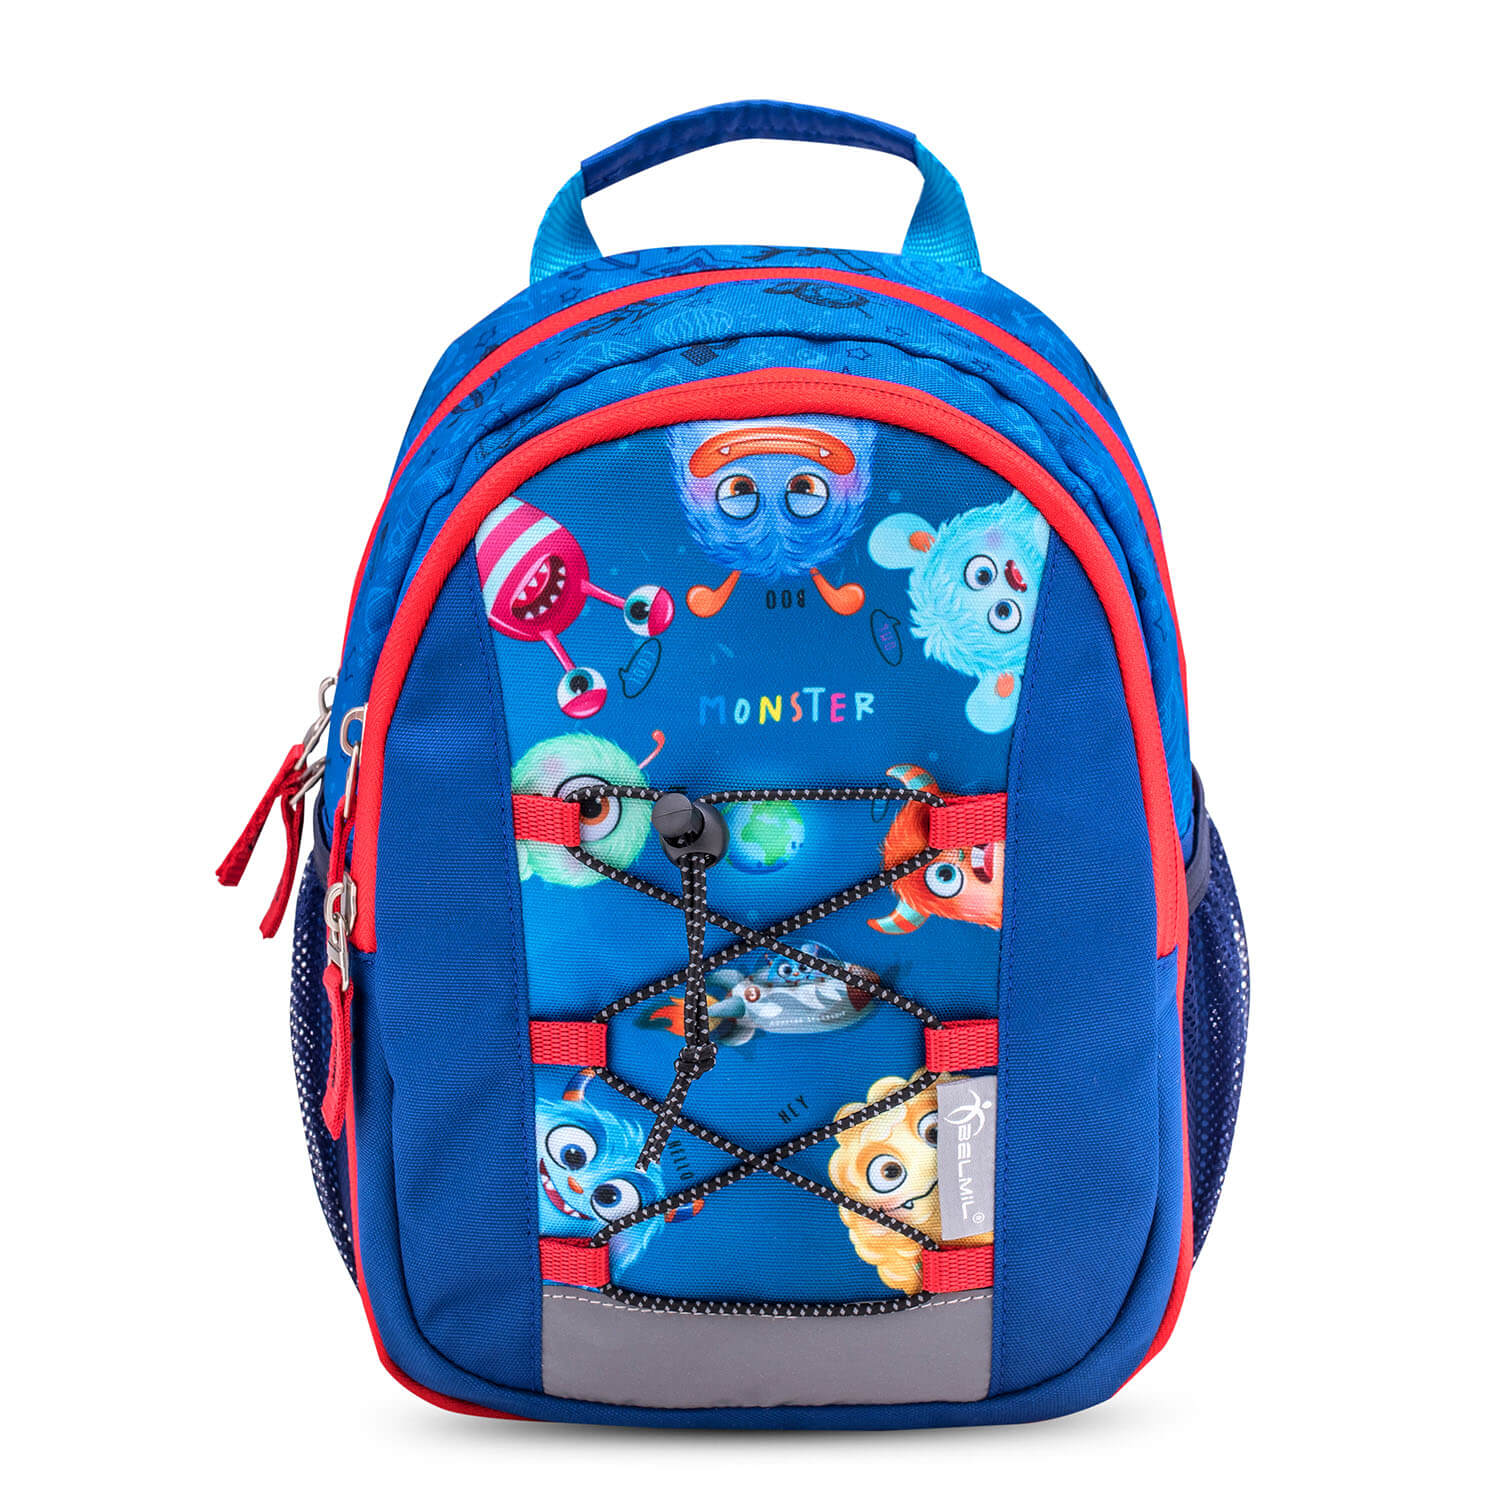 Mini Kiddy Cool Monsters Kindergarten Bag with GRATIS Storage box